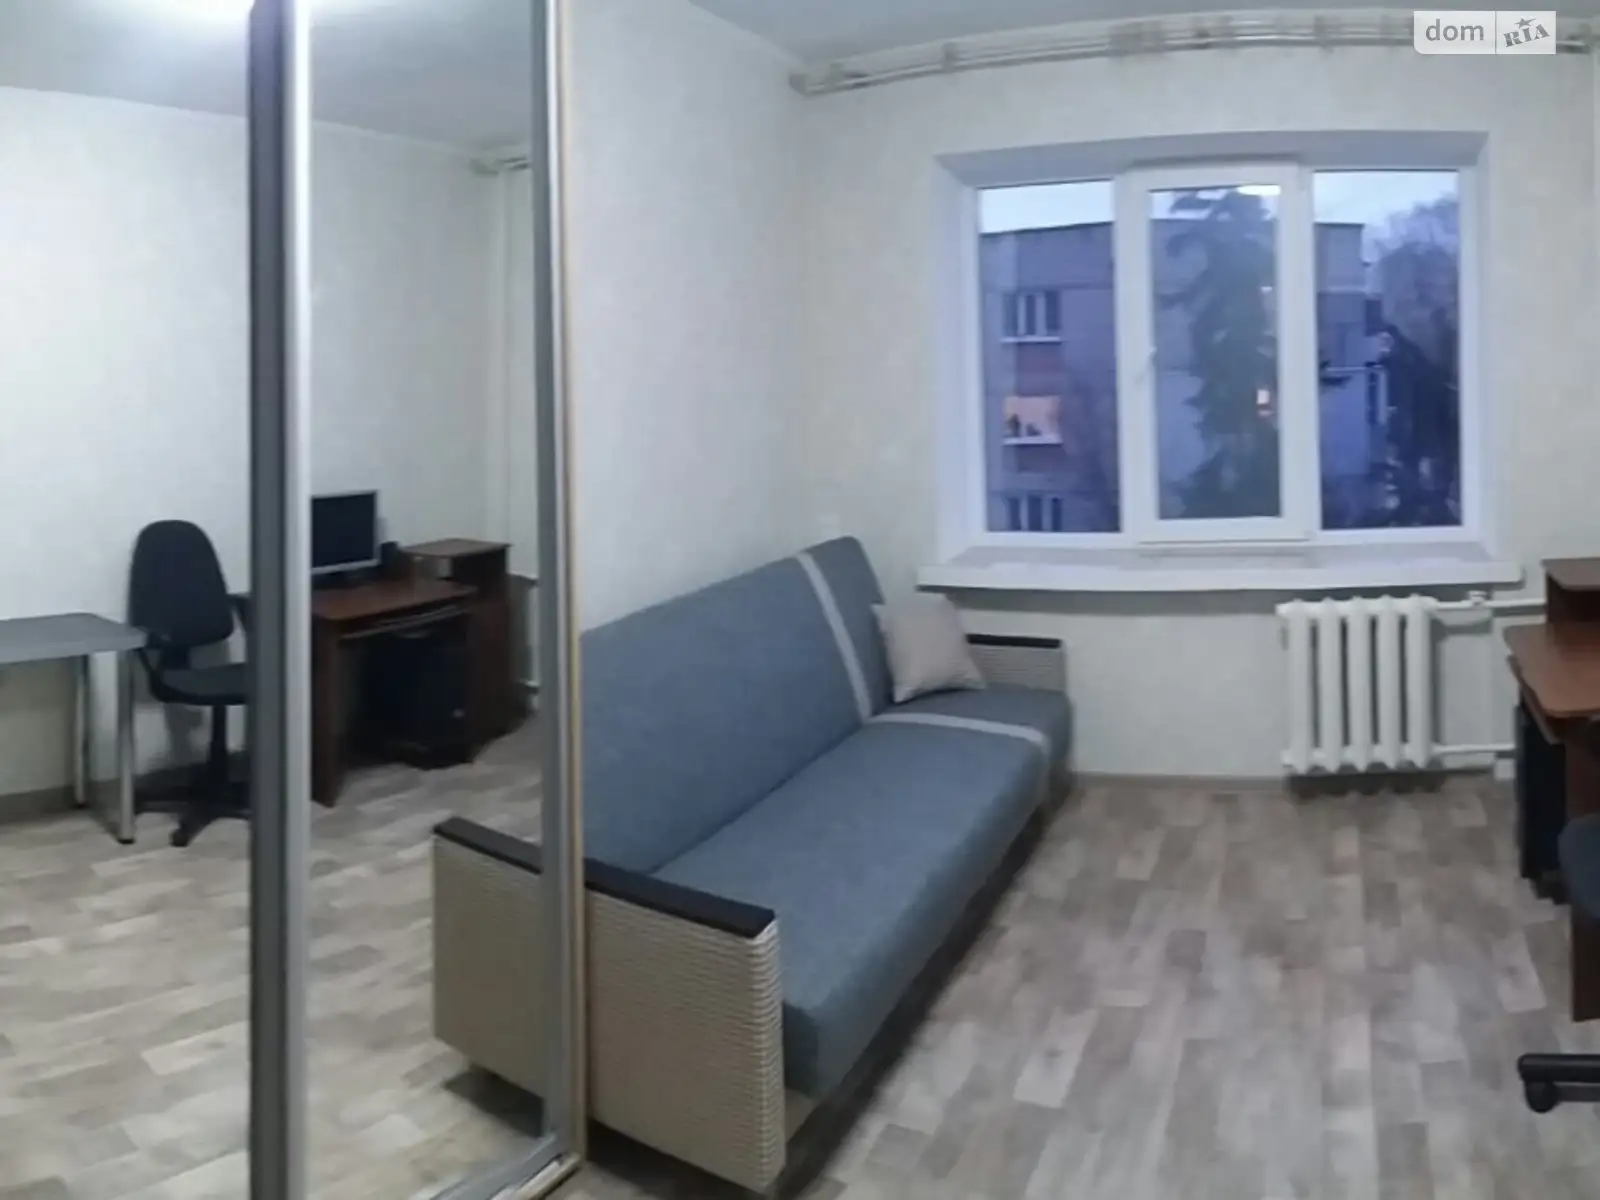 Продается комната 12 кв. м в Харькове - фото 2